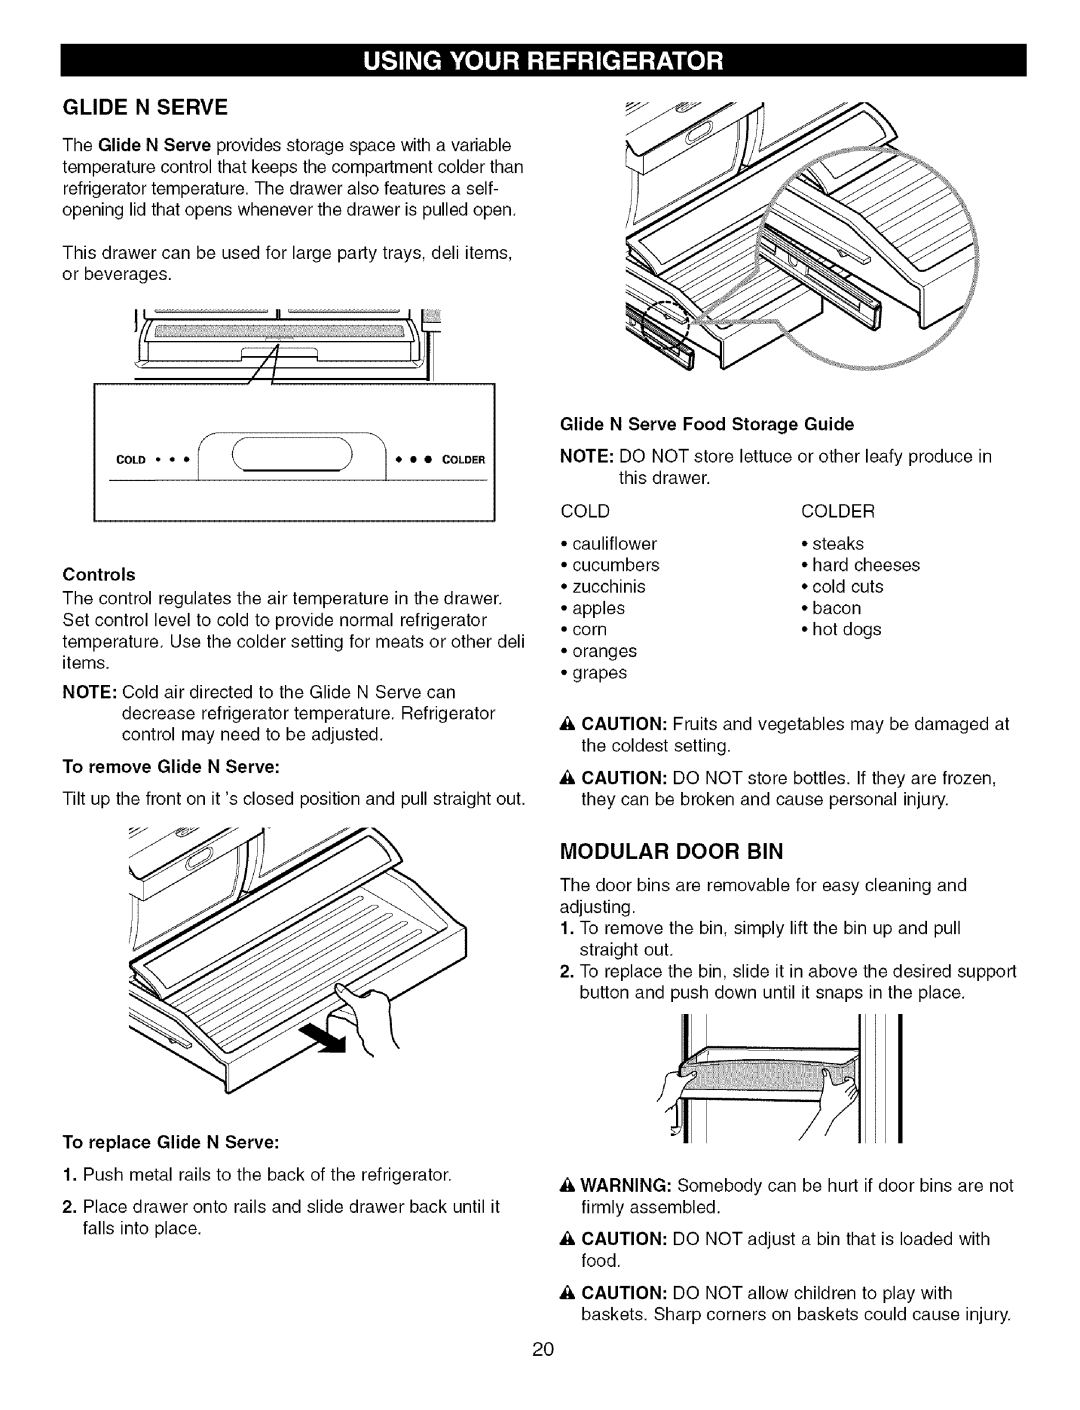 Kenmore 3840JL2019A manual Modular Door Bin, Controls, Glide N Serve Food Storage Guide, To replace Glide N Serve 